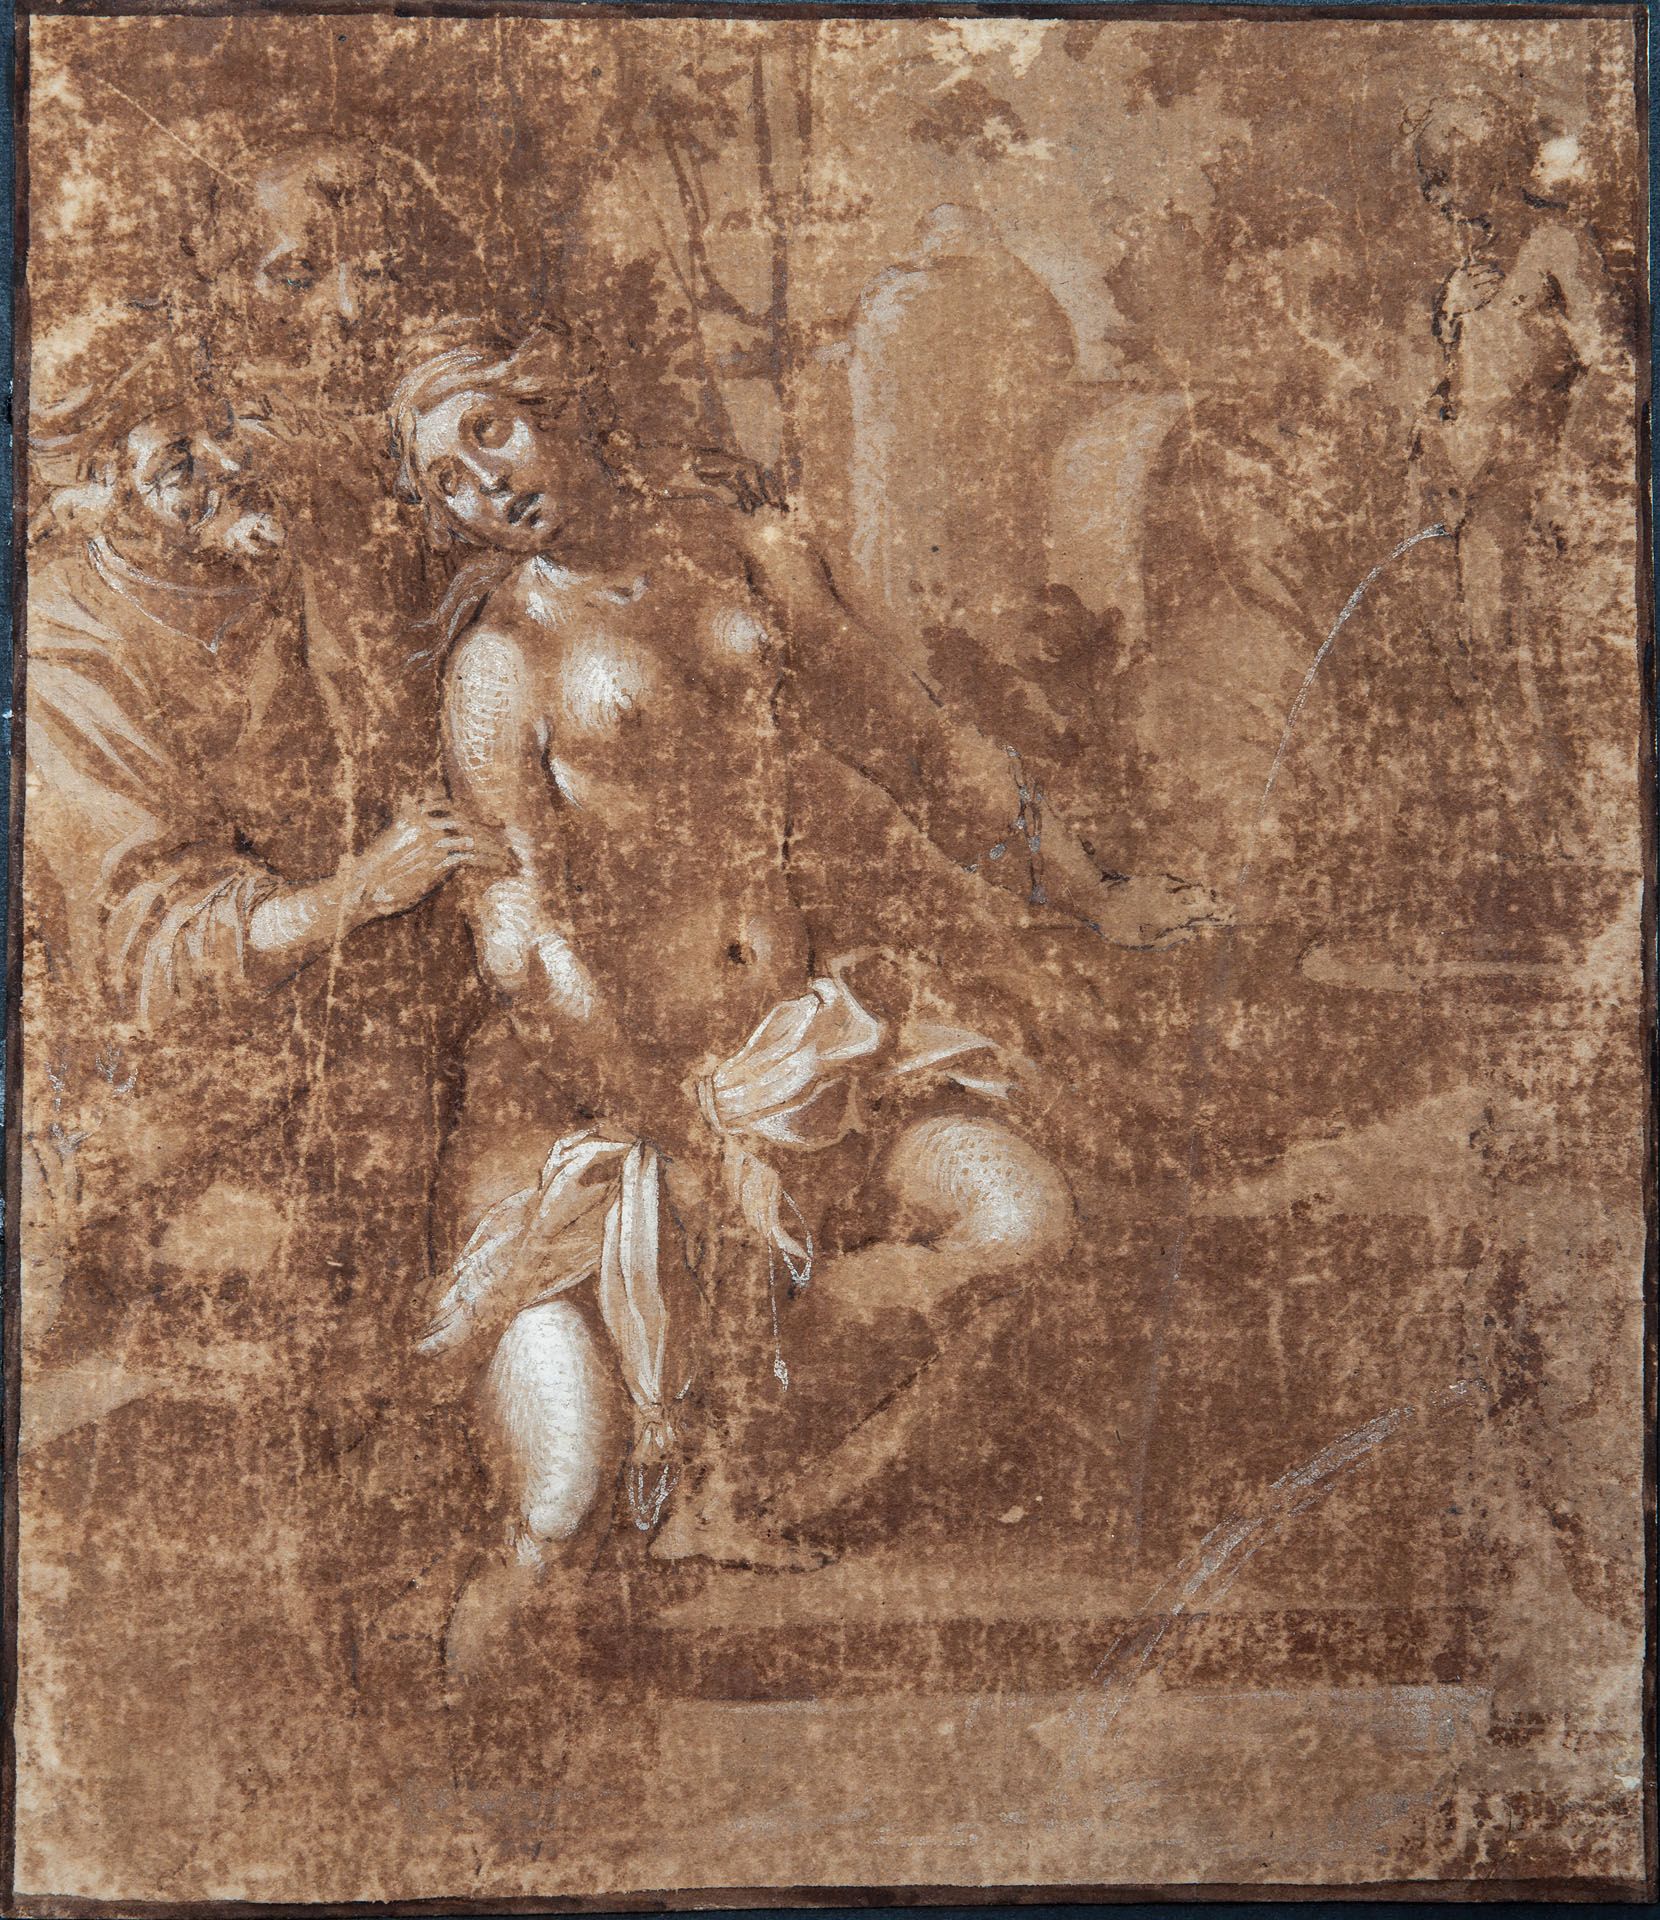 Annibale Carracci (1560–1609), Susana and The Elders